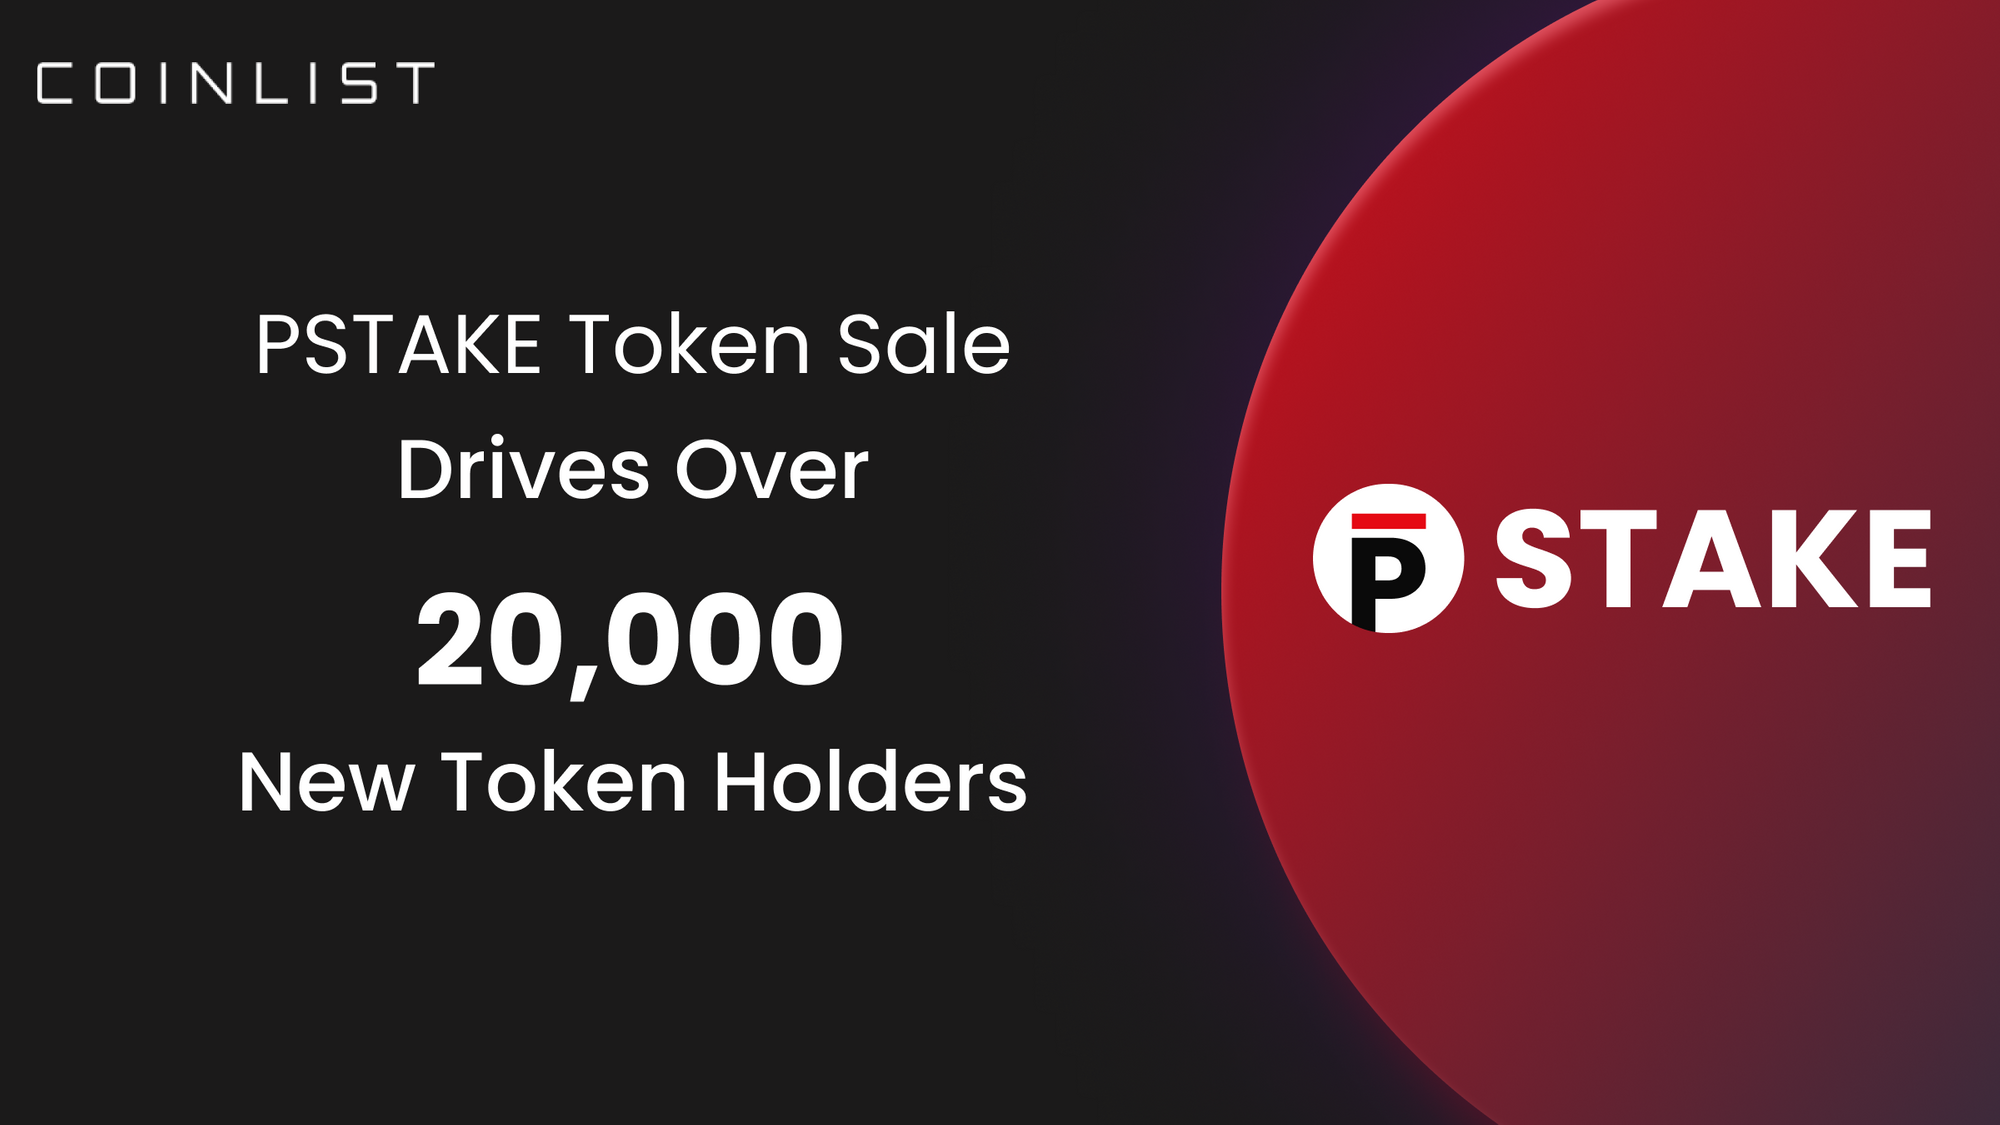 PSTAKE Token Sale Drives 20,000 New Token Holders